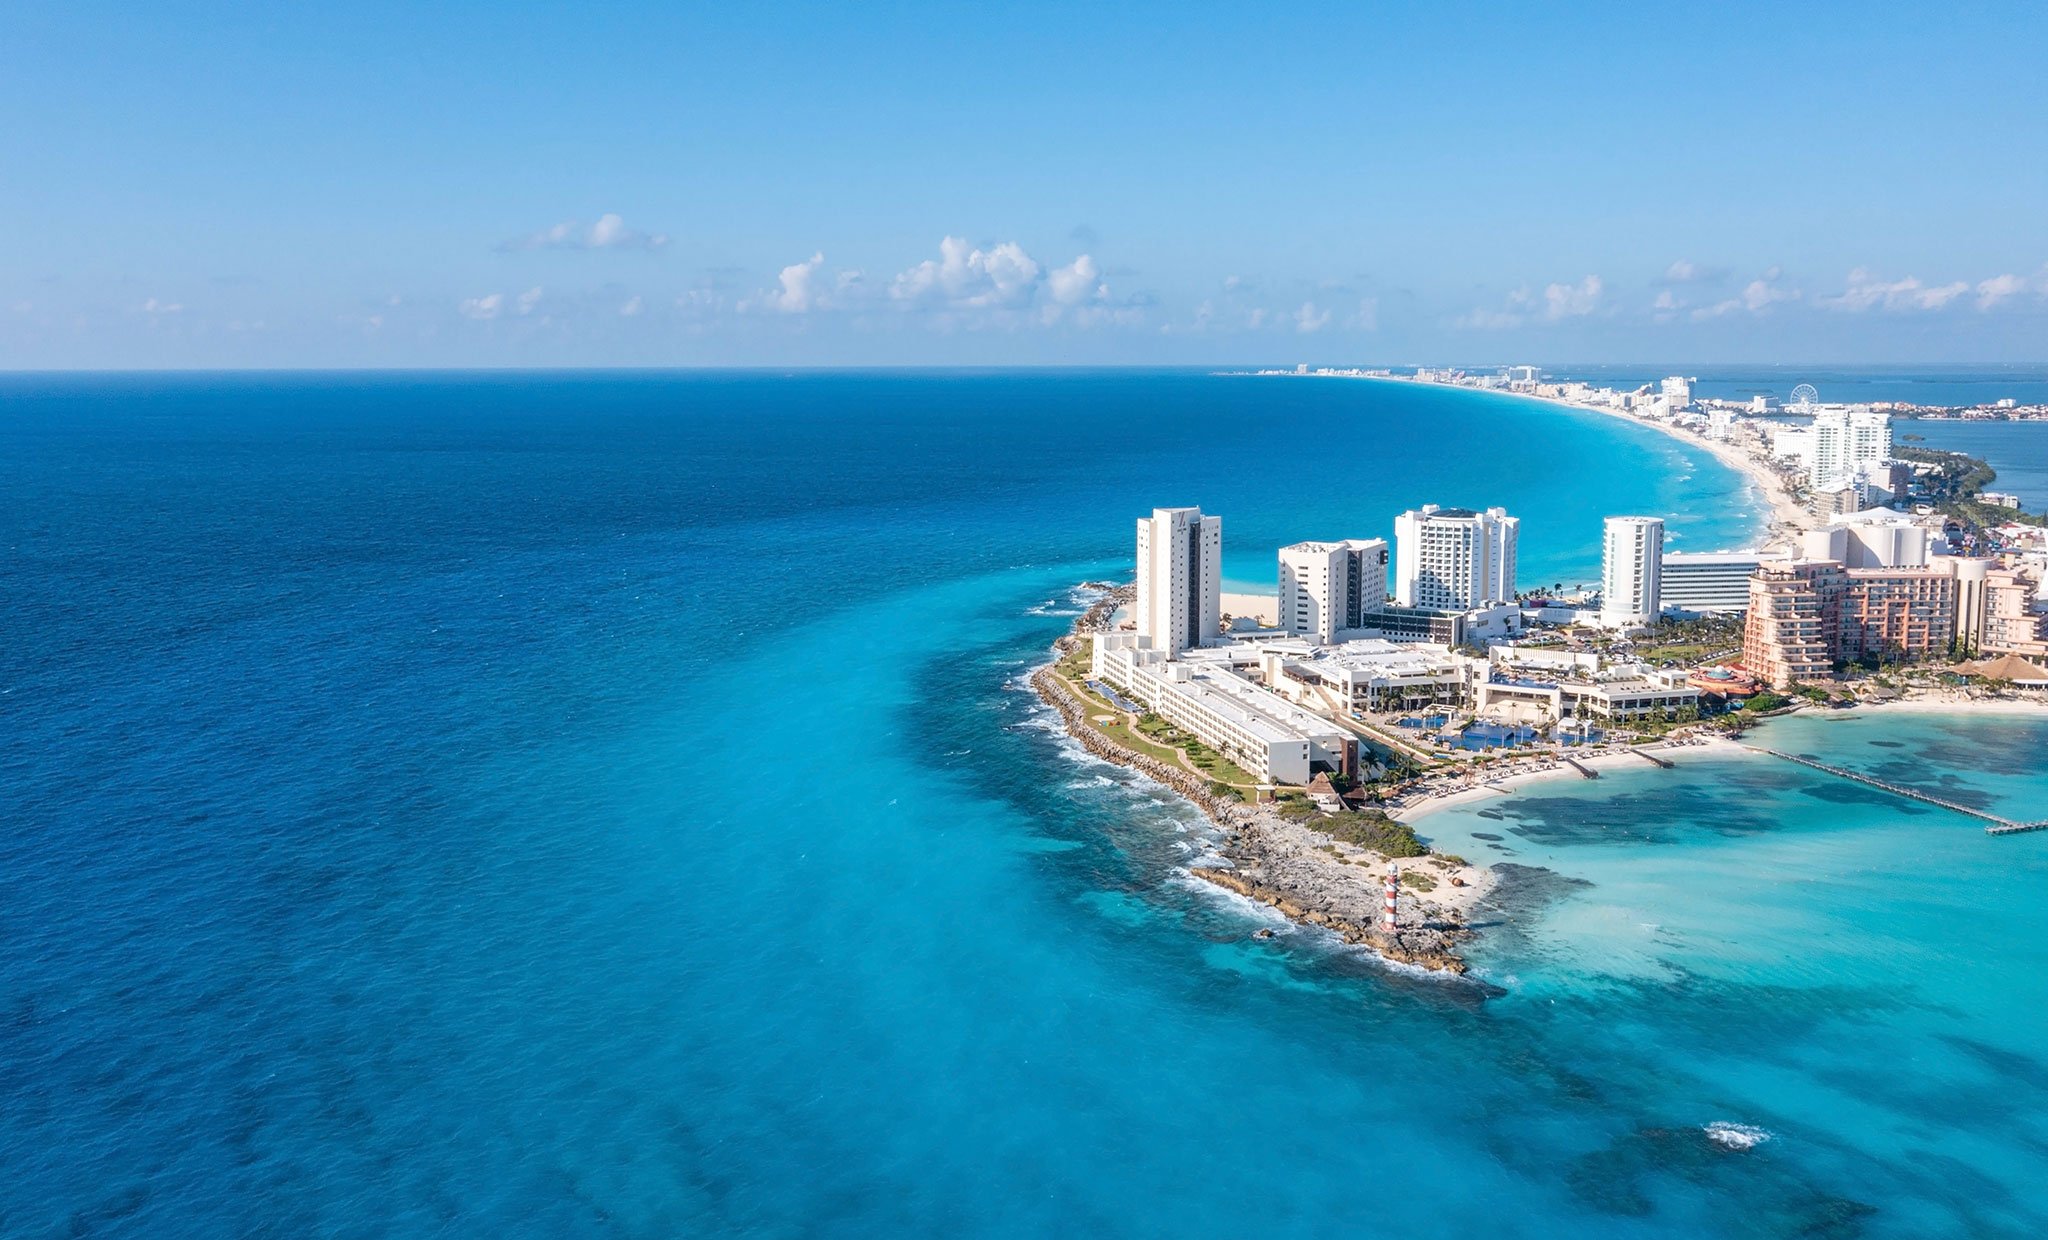 Resorts luxuosos acompanham as praias animadas de Cancún.